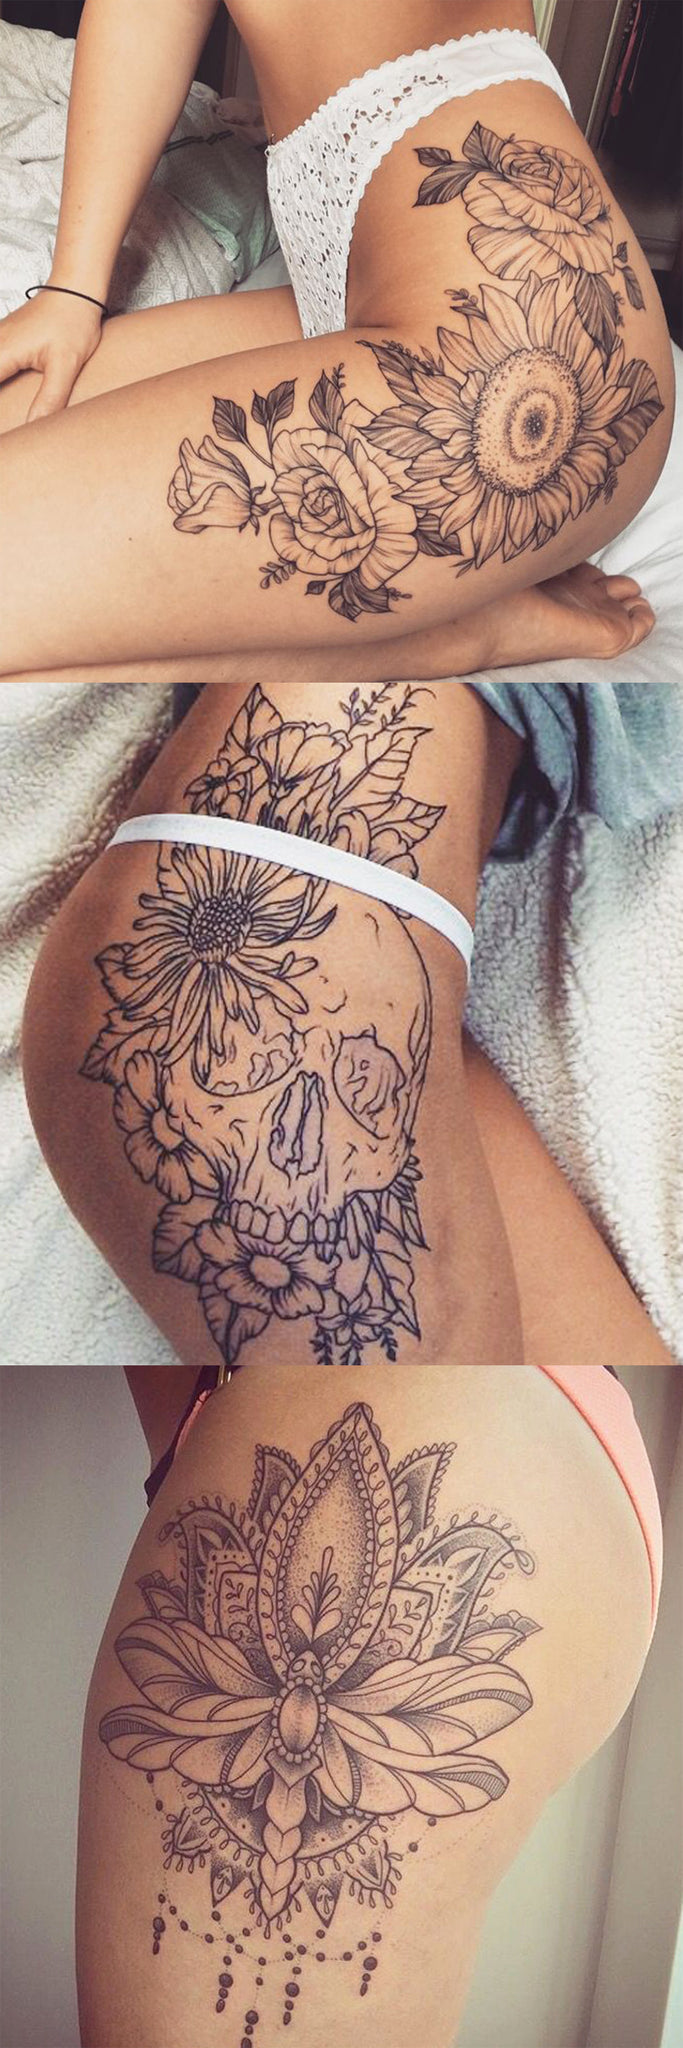 Mandala Thigh Tattoo Ideas at MyBodiArt.com - Sunflower Skull Leg Hip Black and White Tatt